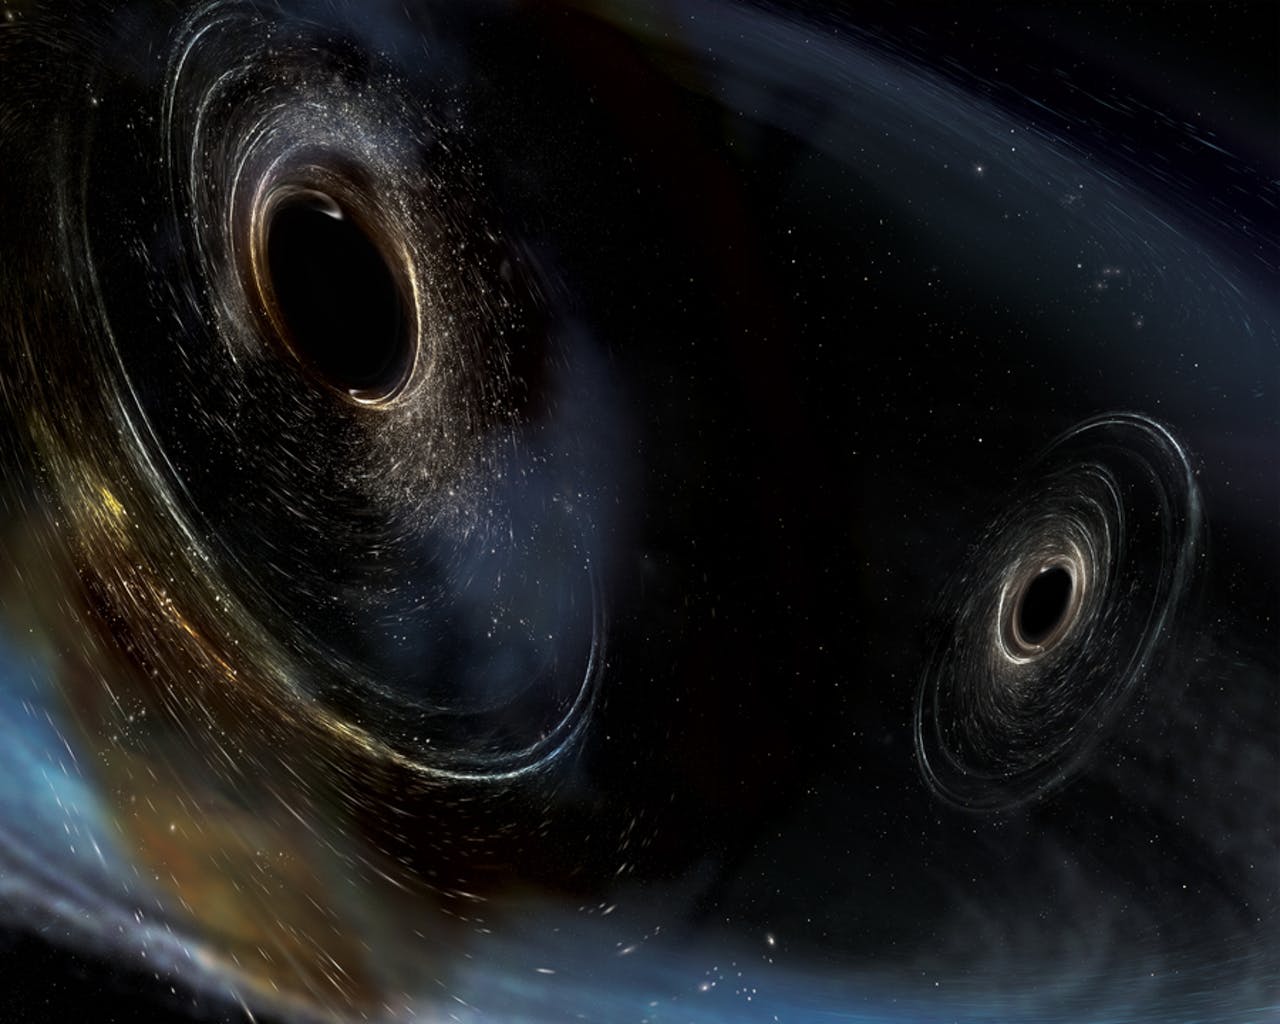 Artist's design shows two molten black holes similar to those detected by LIGO